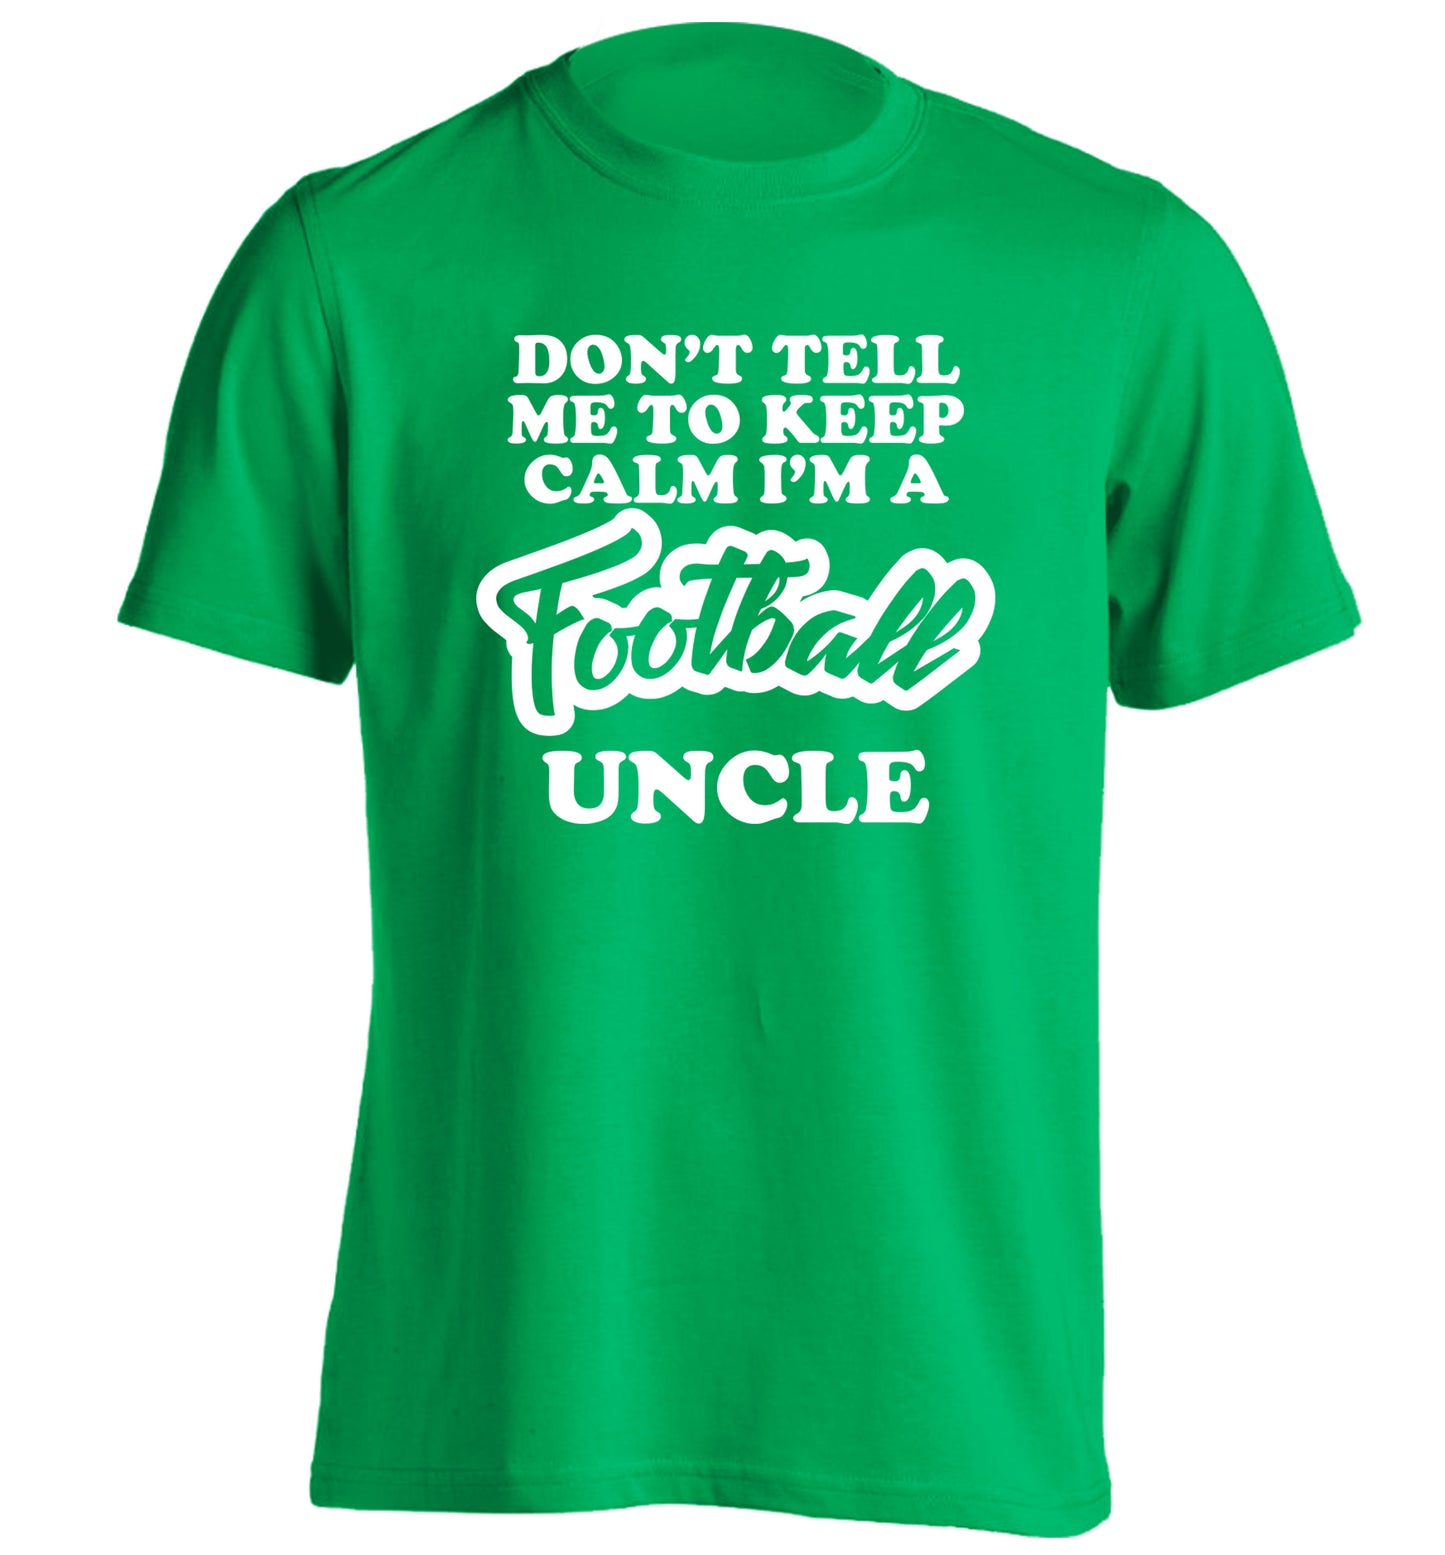 Worlds most amazing football uncle adults unisexgreen Tshirt 2XL